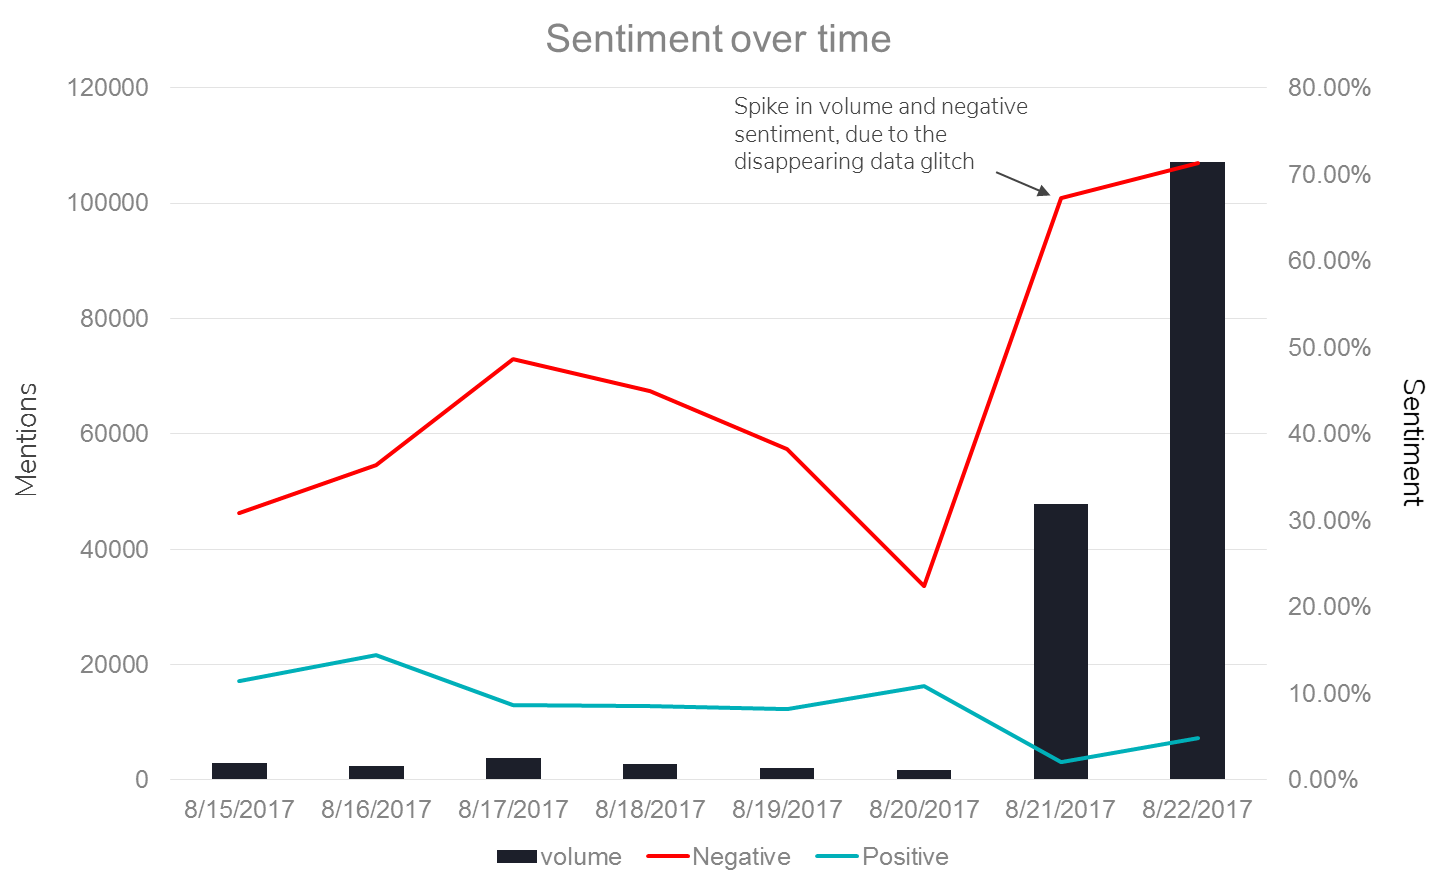 Vodacom sentiment over time after data glitch